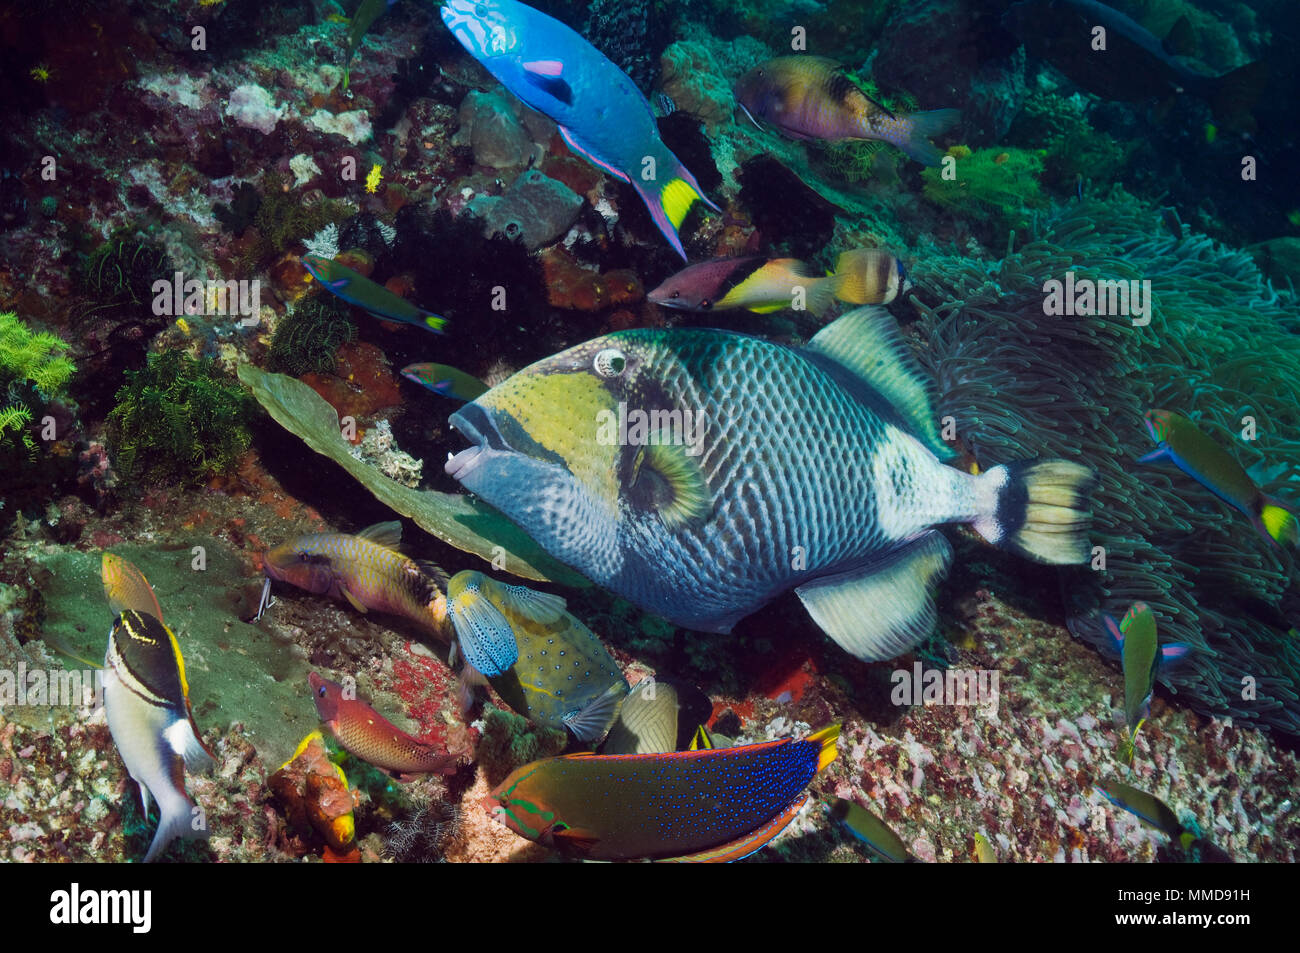 Giant triggerfish (Balistoides viridescens) feeding on coral reef Stock Photo